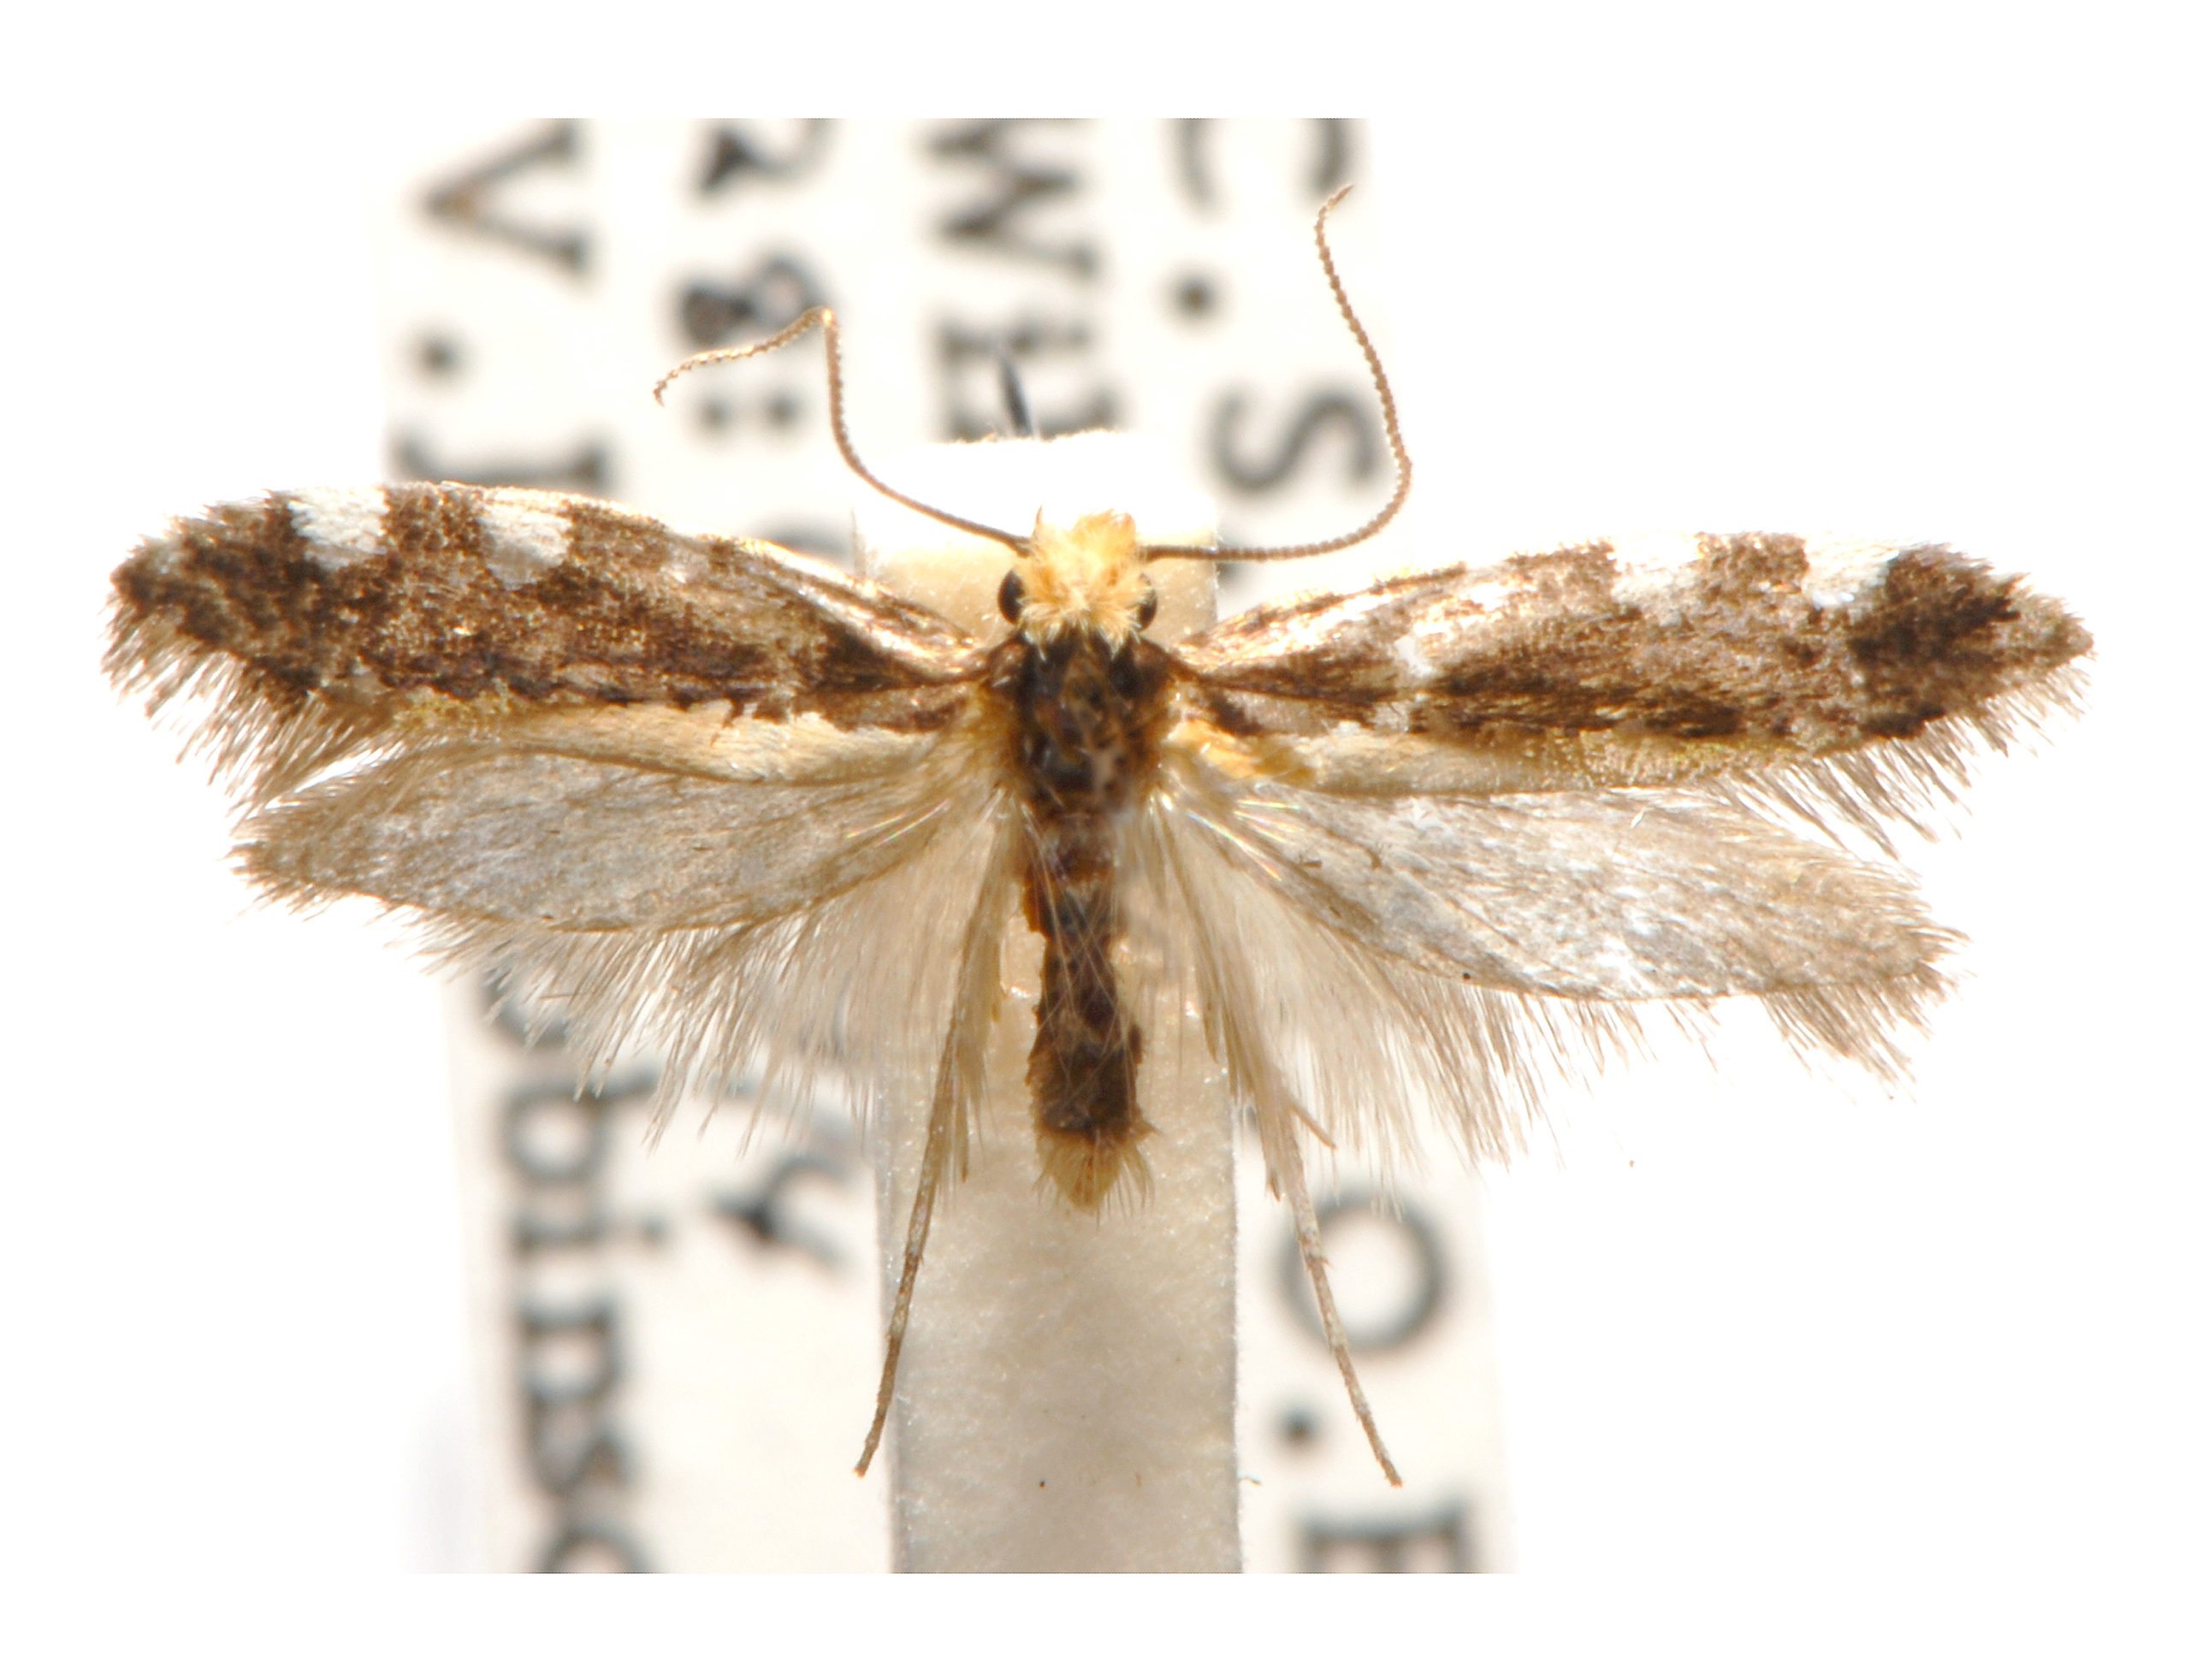 Ptyssoptera tetropa